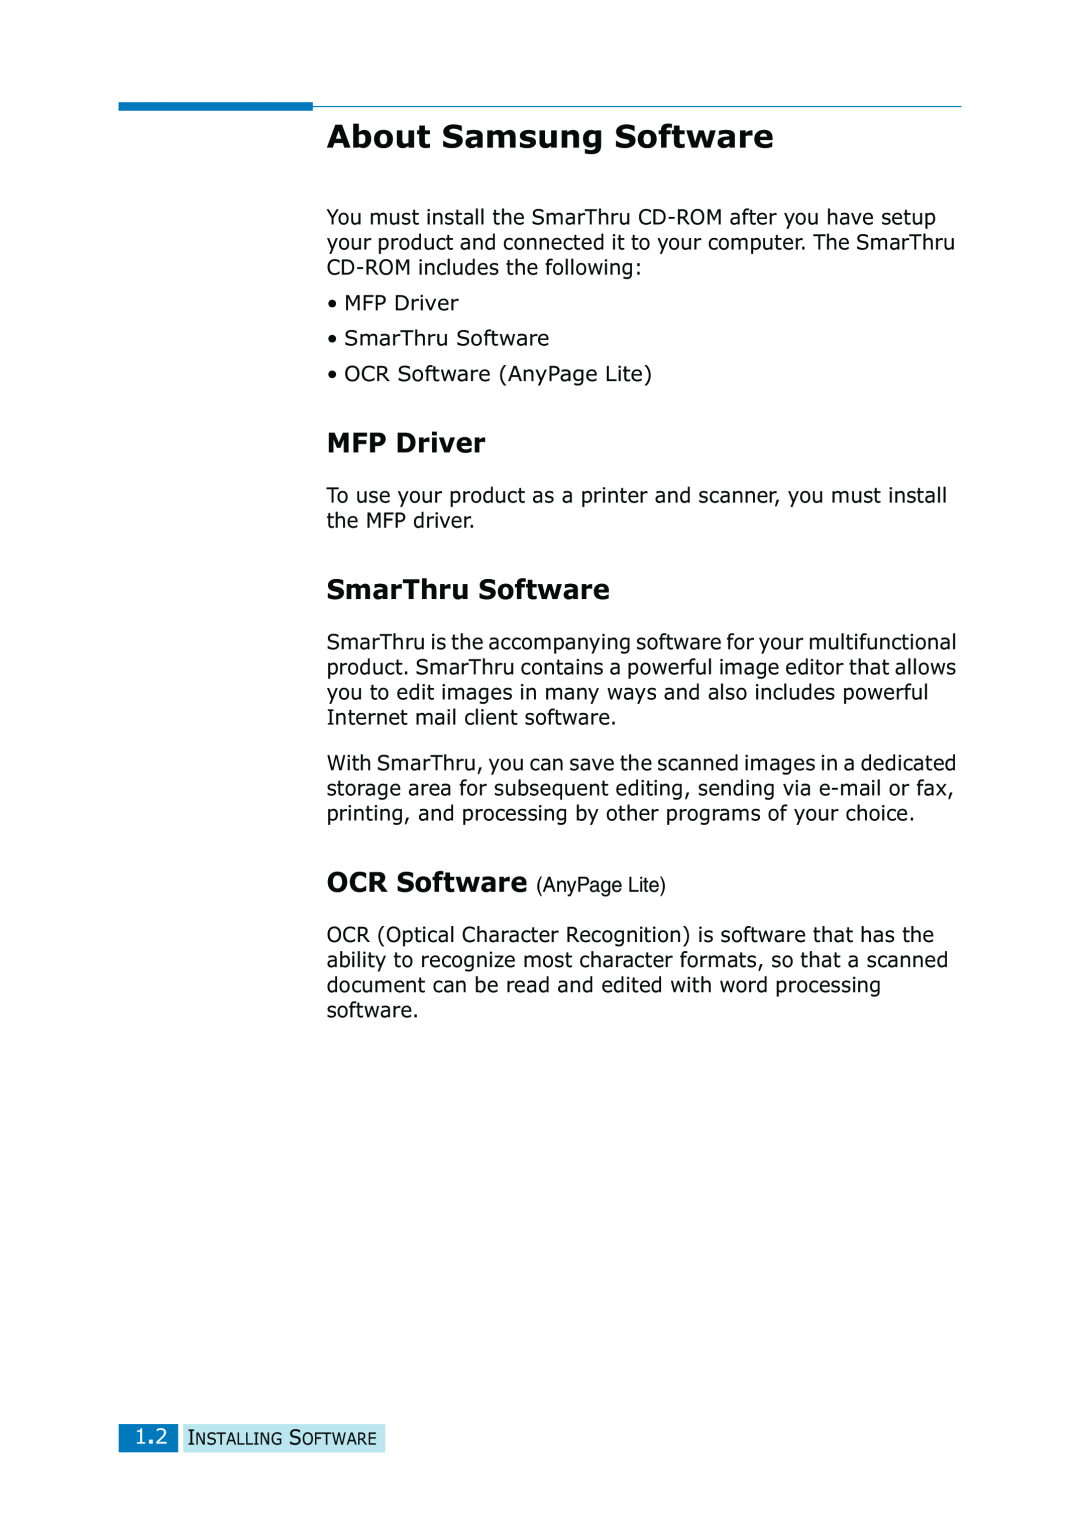 Samsung SF-835P manual About Samsung Software, MFP Driver, SmarThru Software 